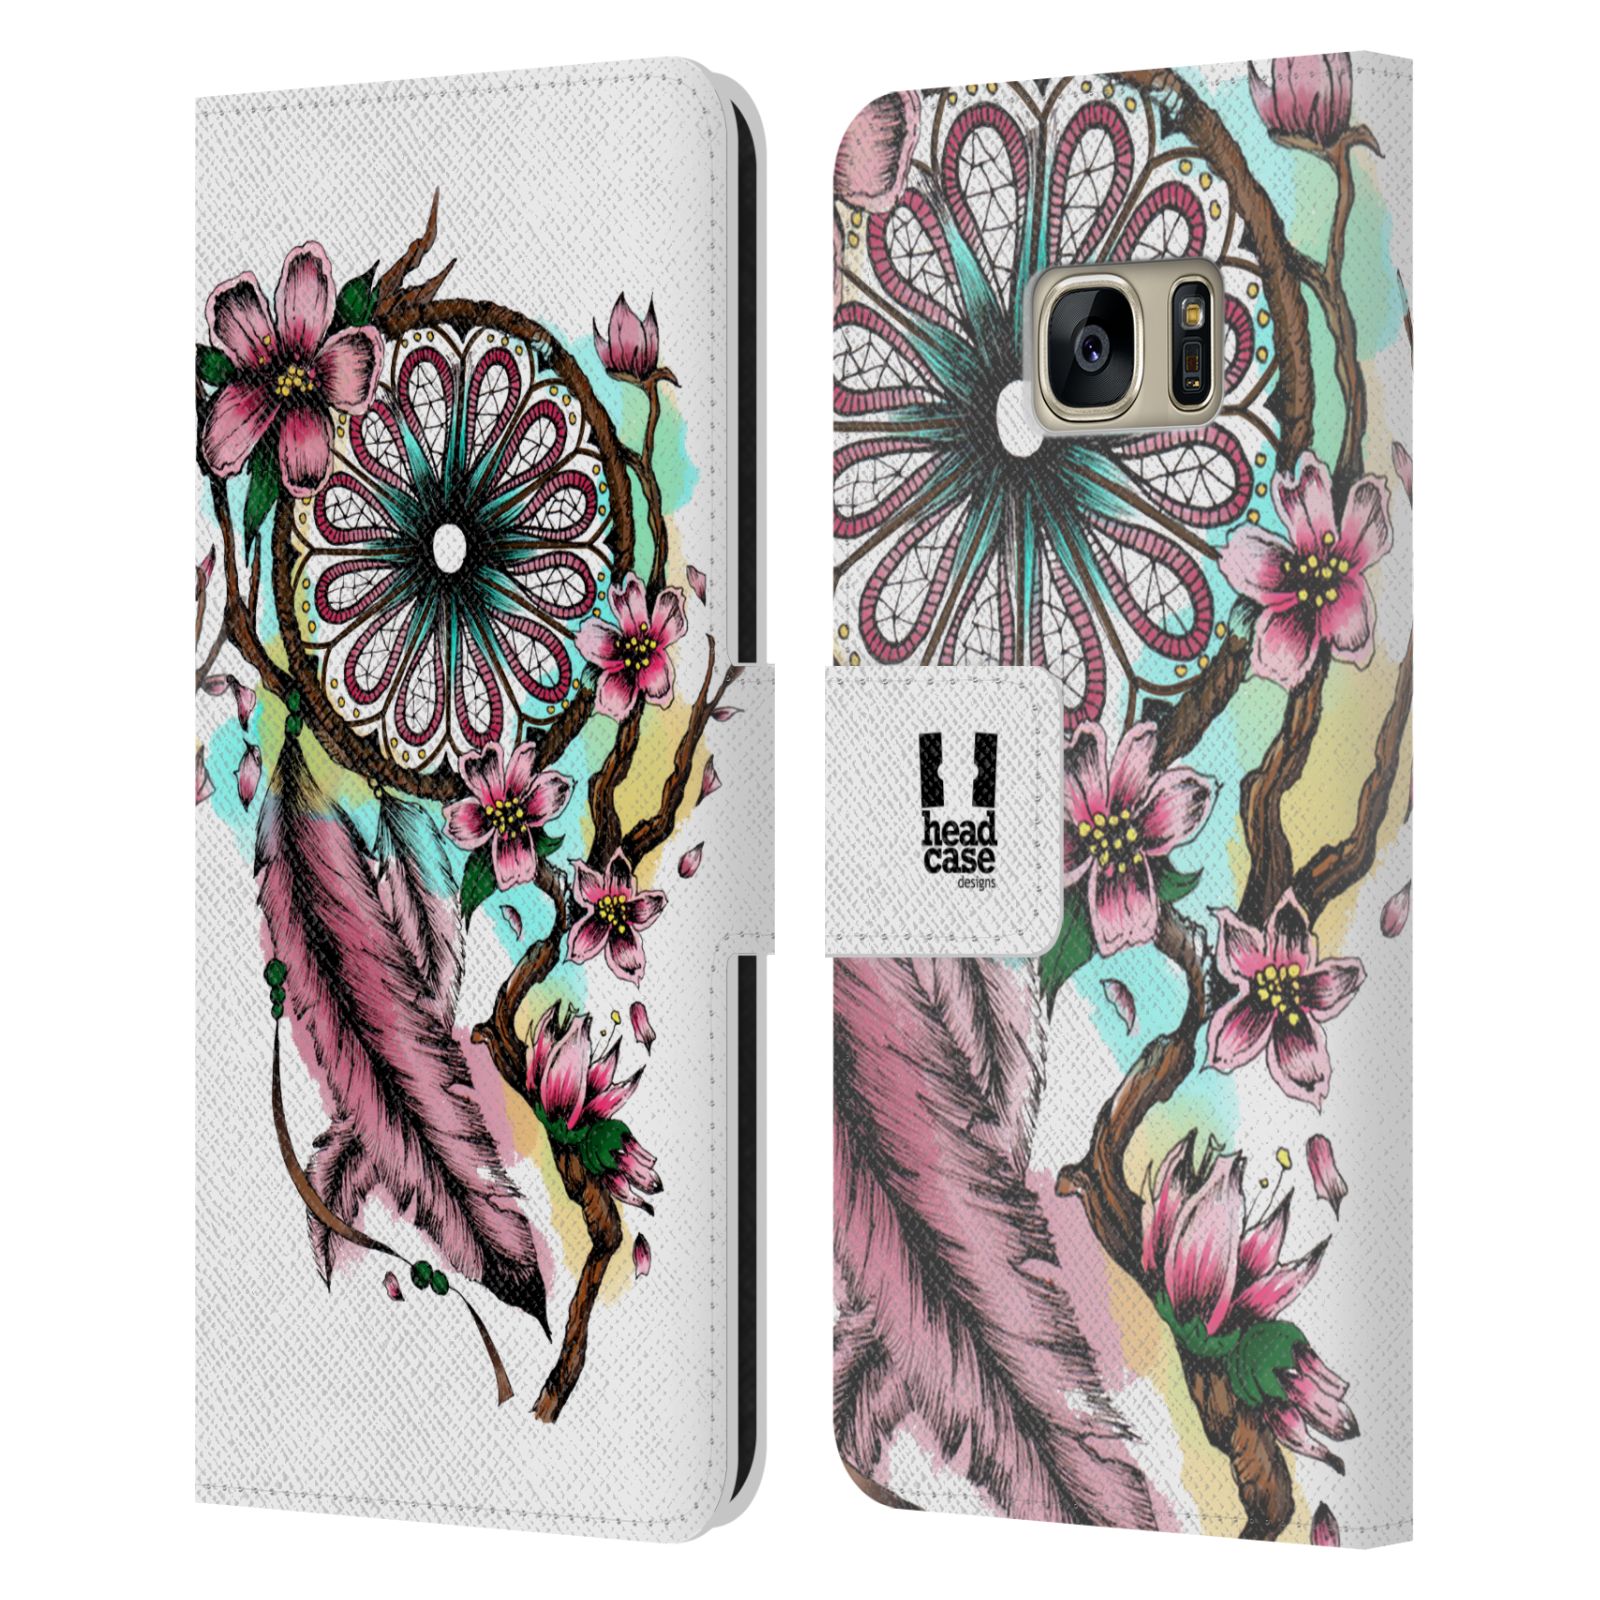 Pouzdro pro mobil Samsung Galaxy S7 - Květinový vzor lapač snů